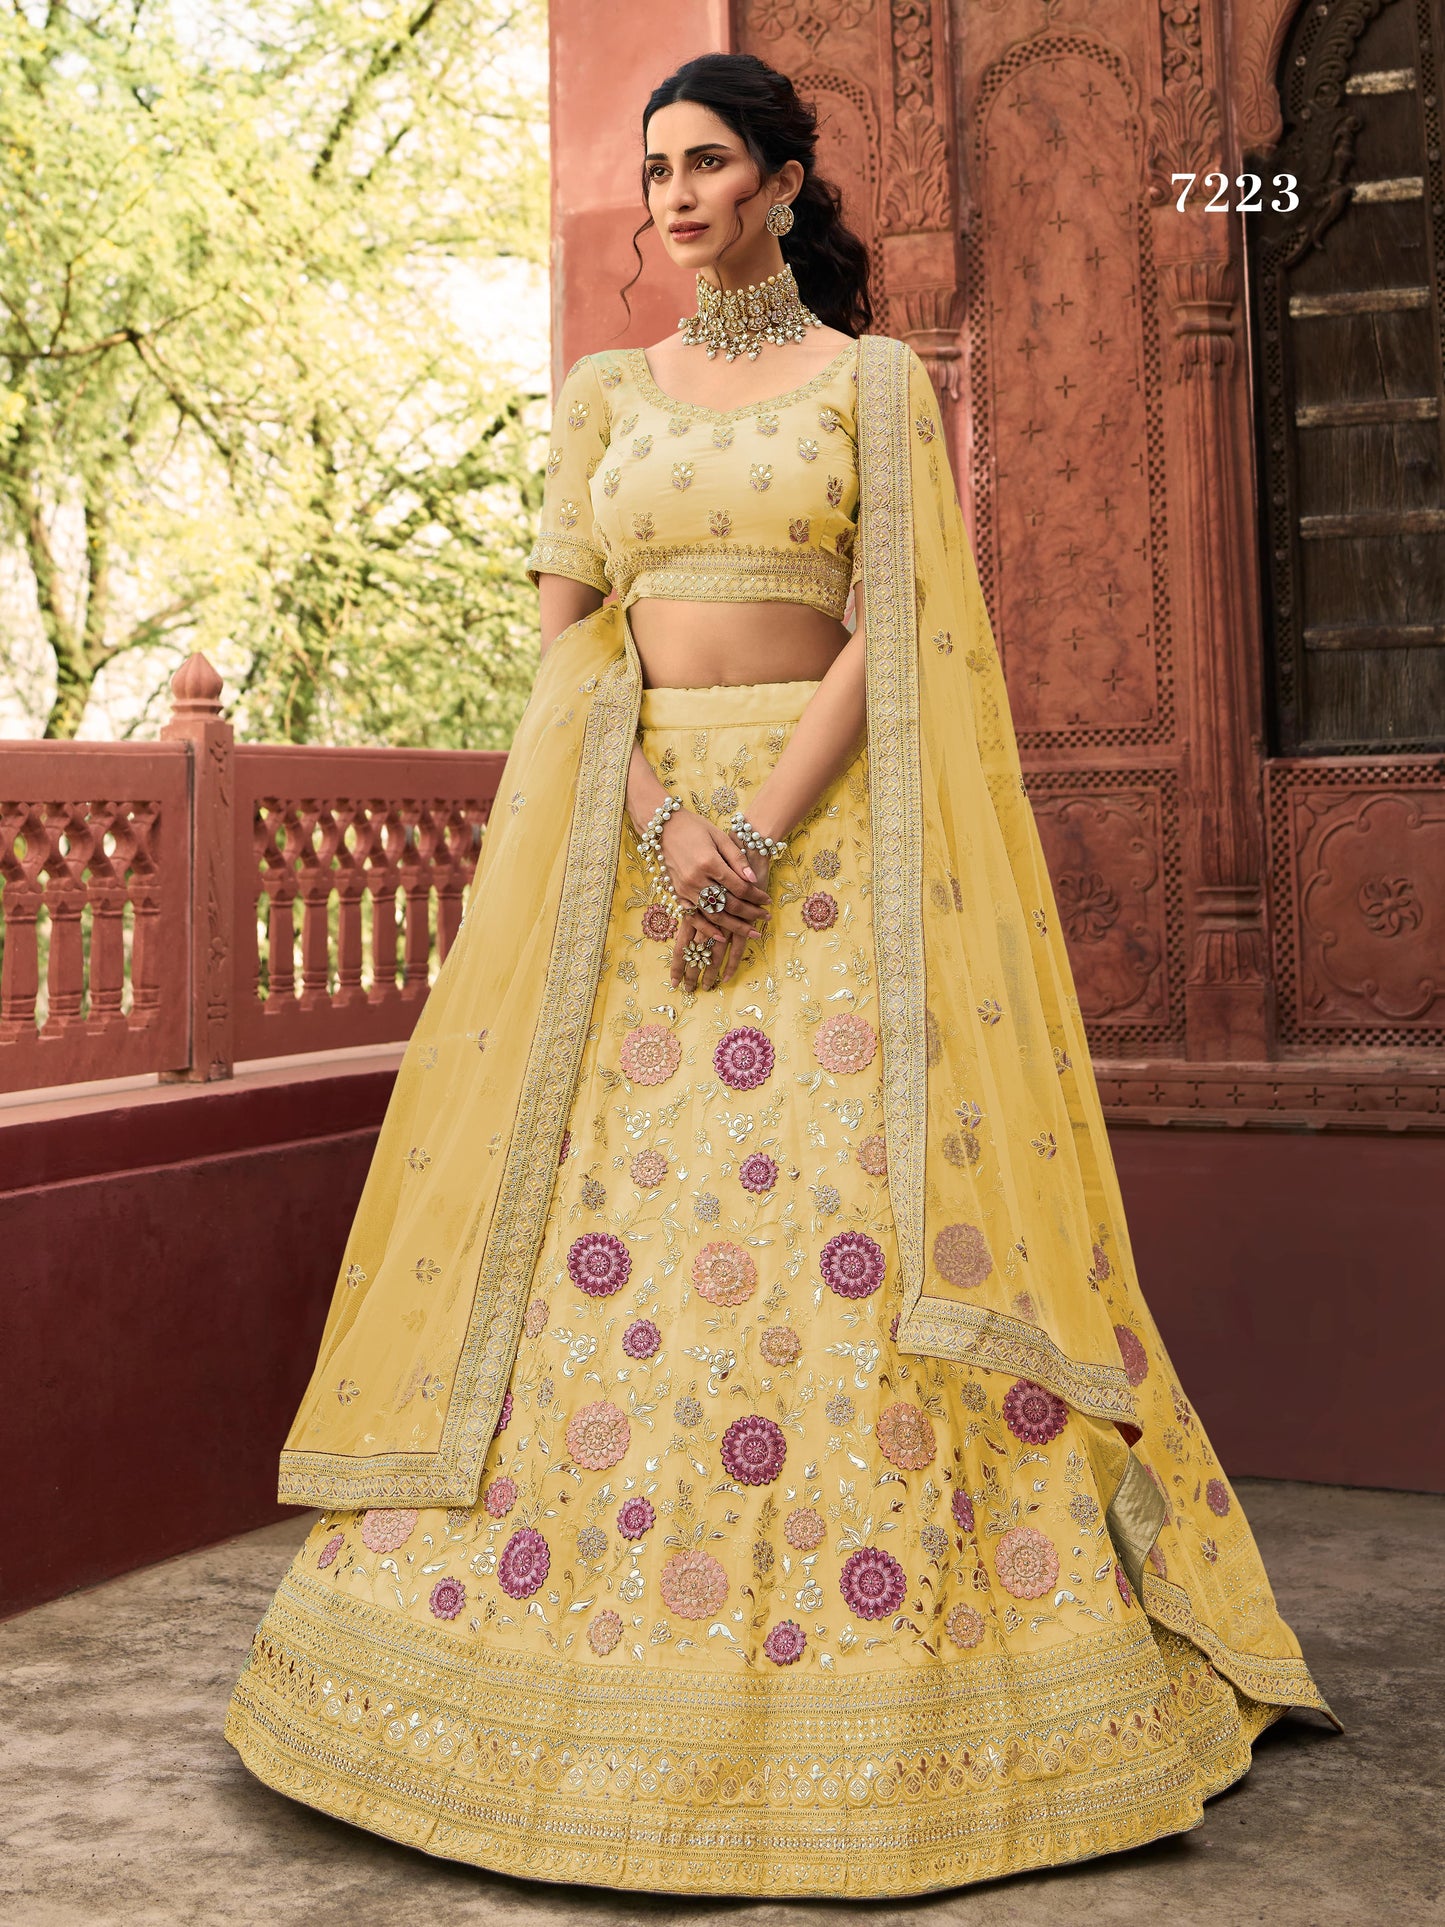 Trendy Latest Yellow Bridal Designer Lehenga Choli Buy Now